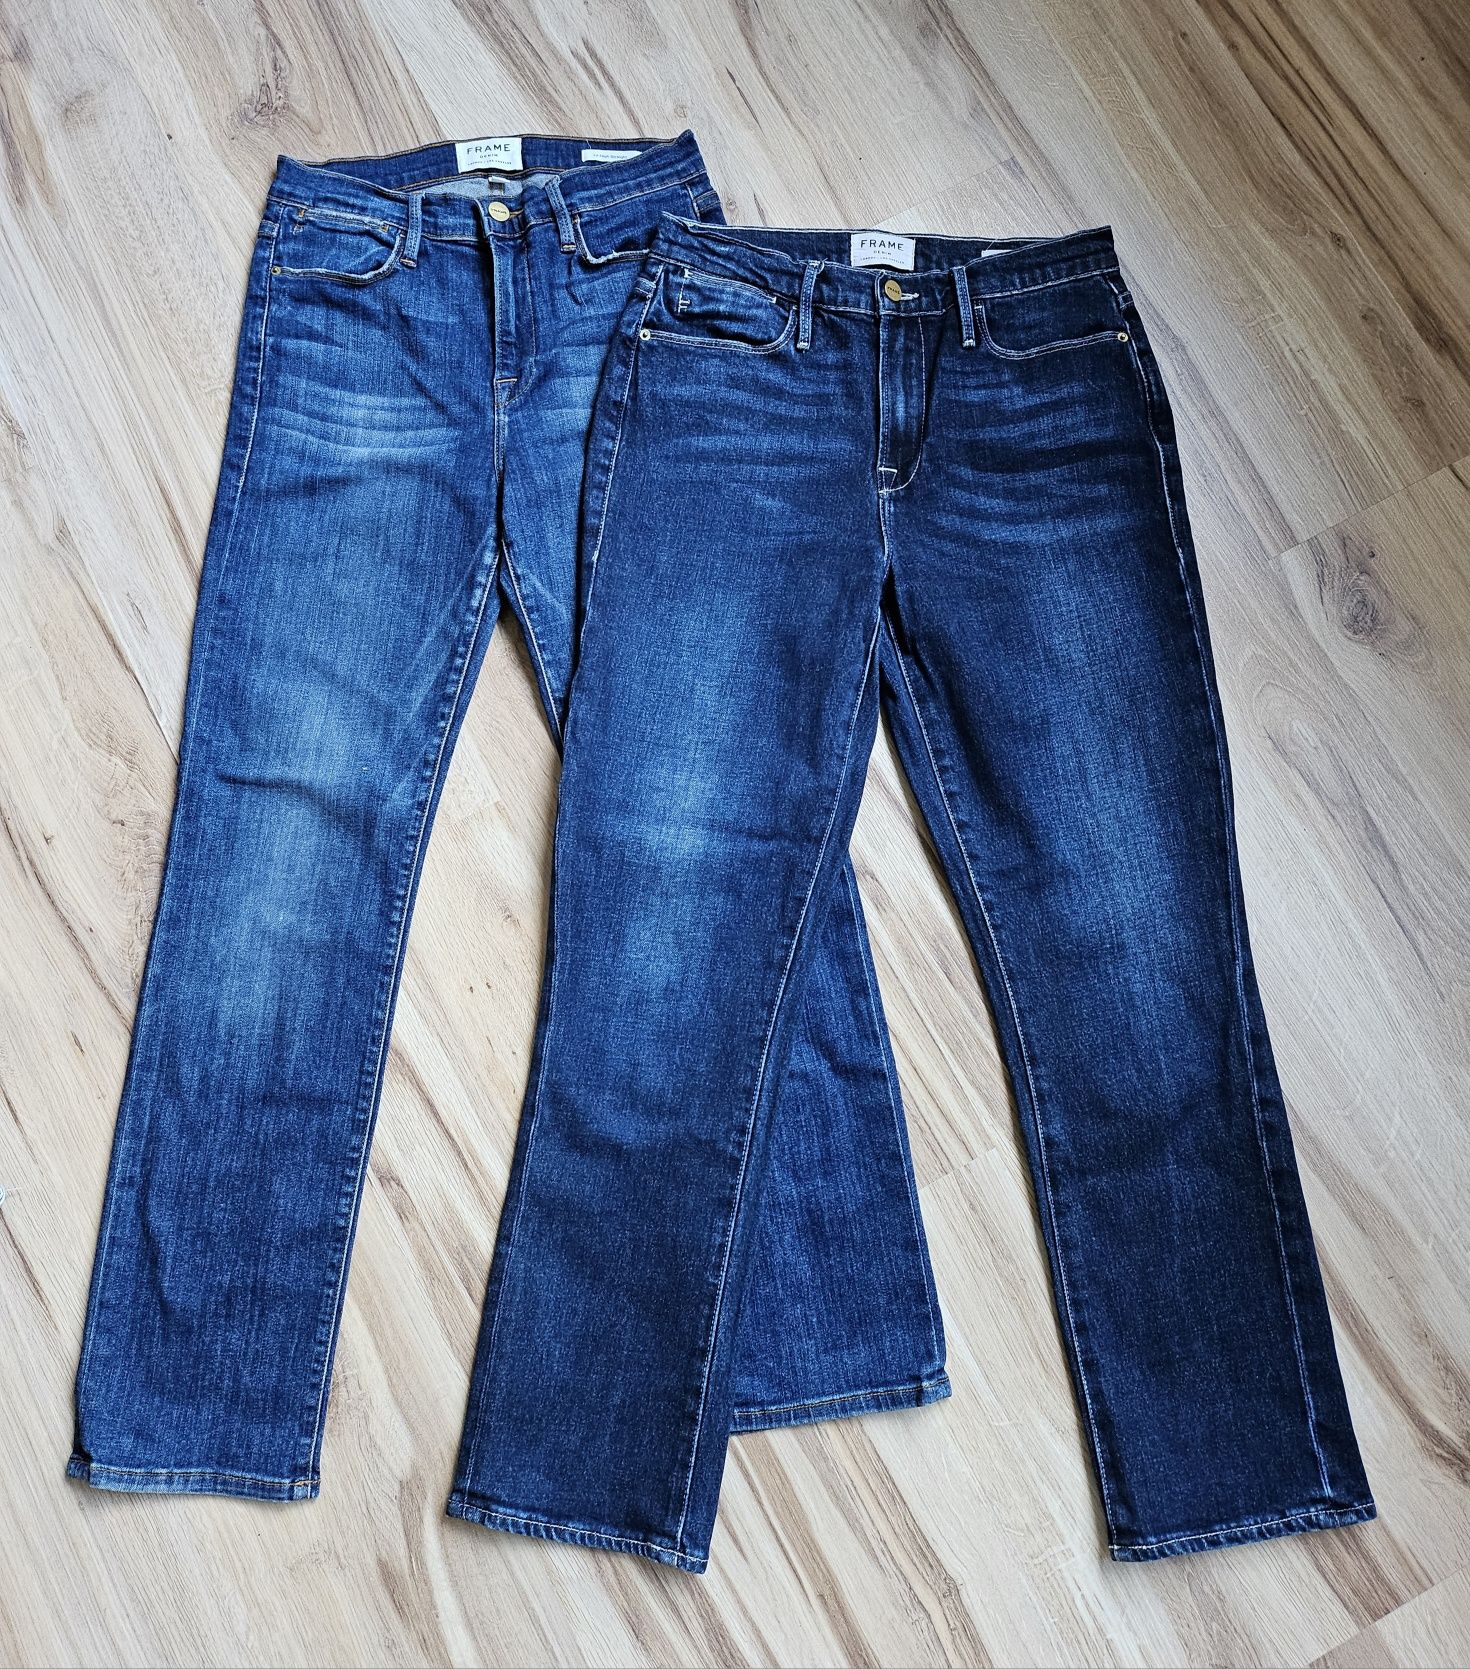 zestaw 8 par spodni typu  jeans + piękny gratis